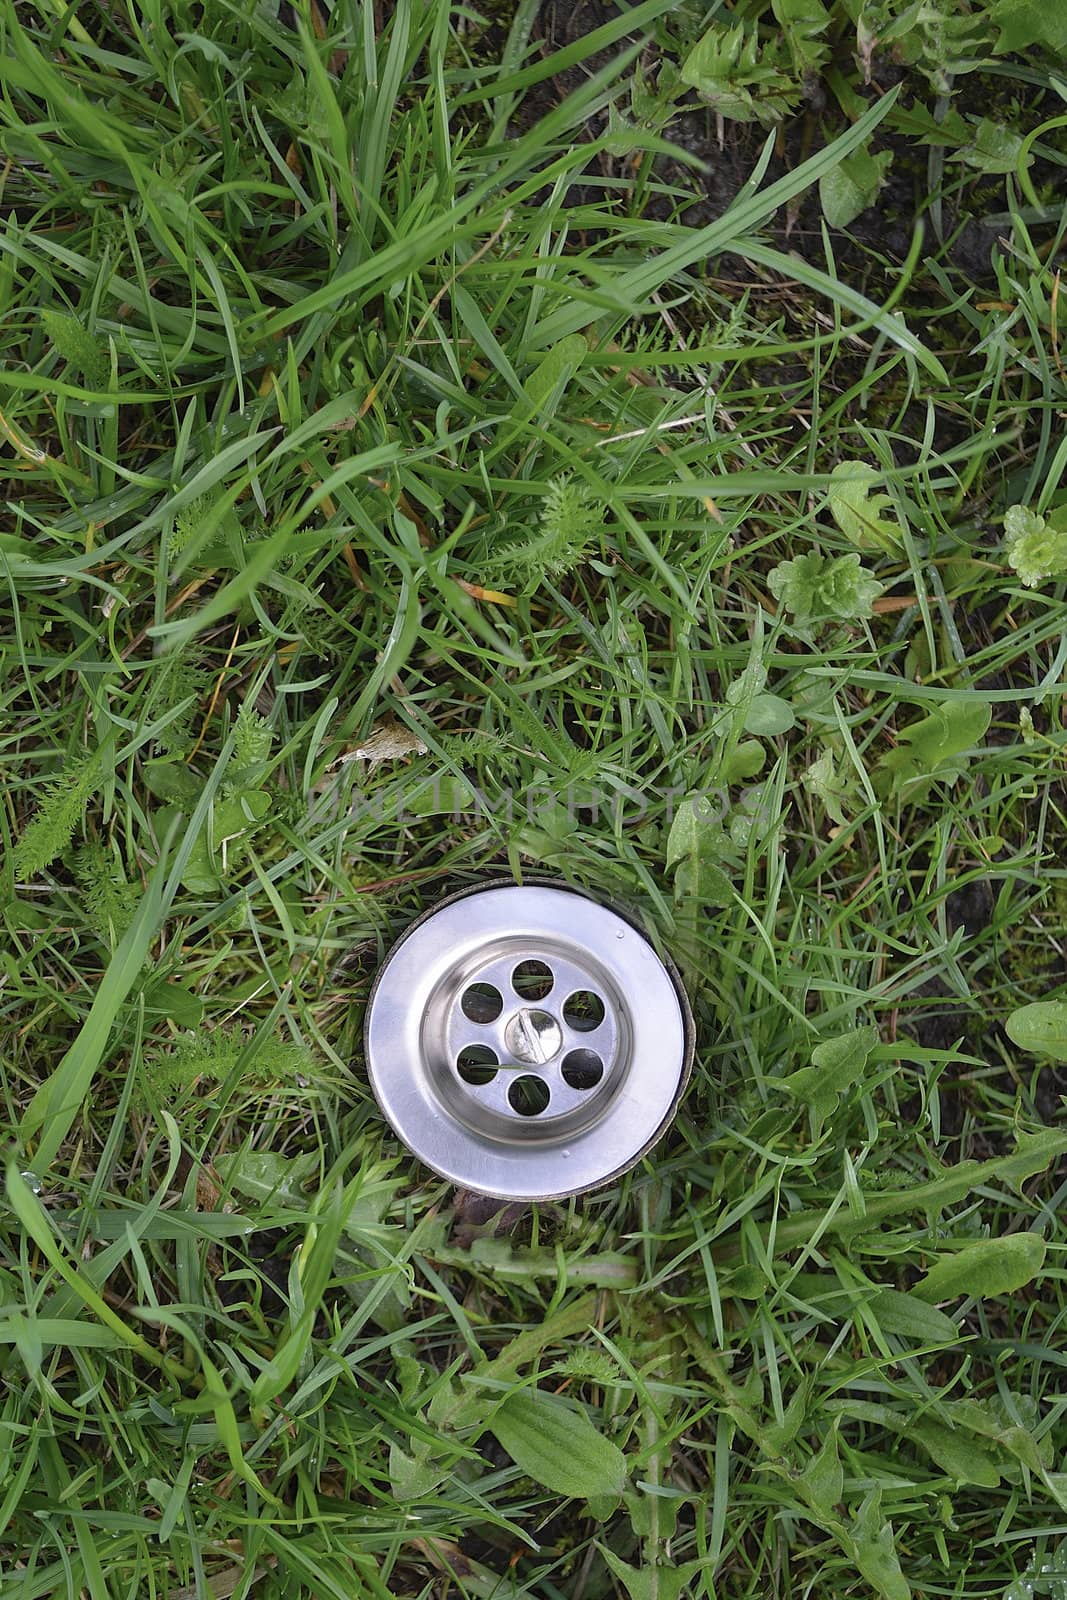 metallic sink hole among green grass background